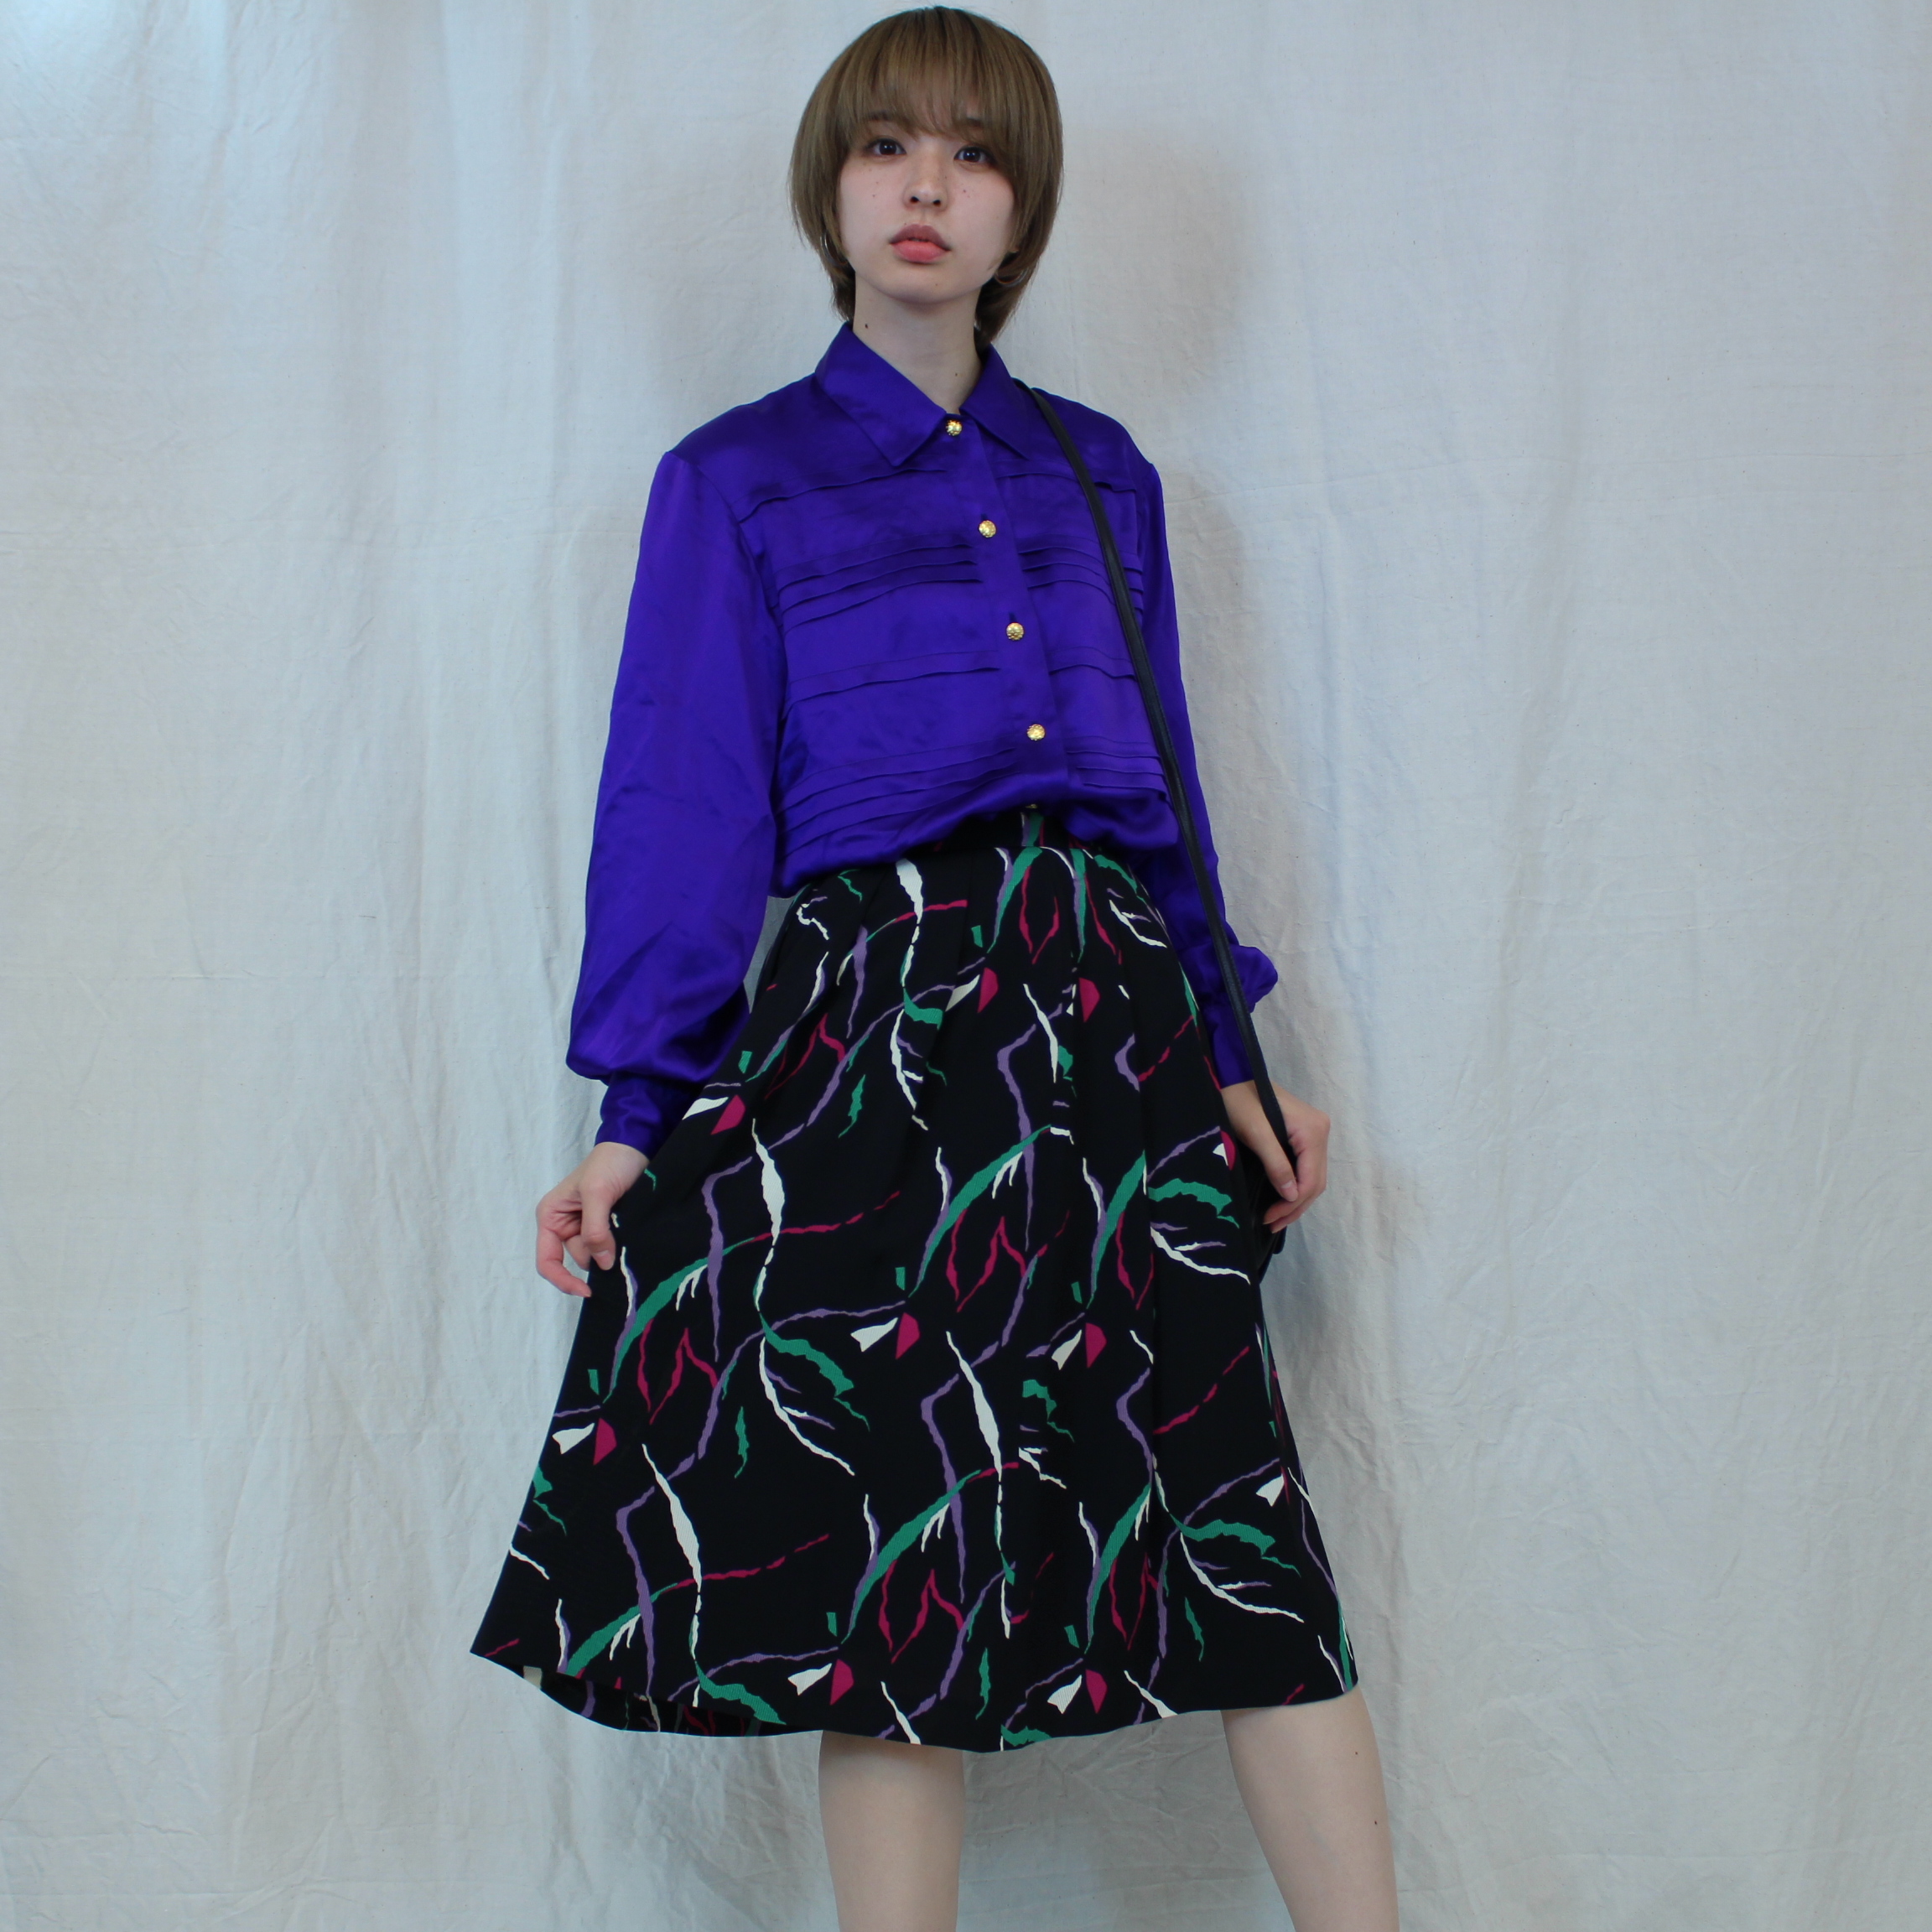 Luichantant Retro Patterned Pleat Skirt ルイシャンタンレトロ柄プリーツスカート Titti Clothing